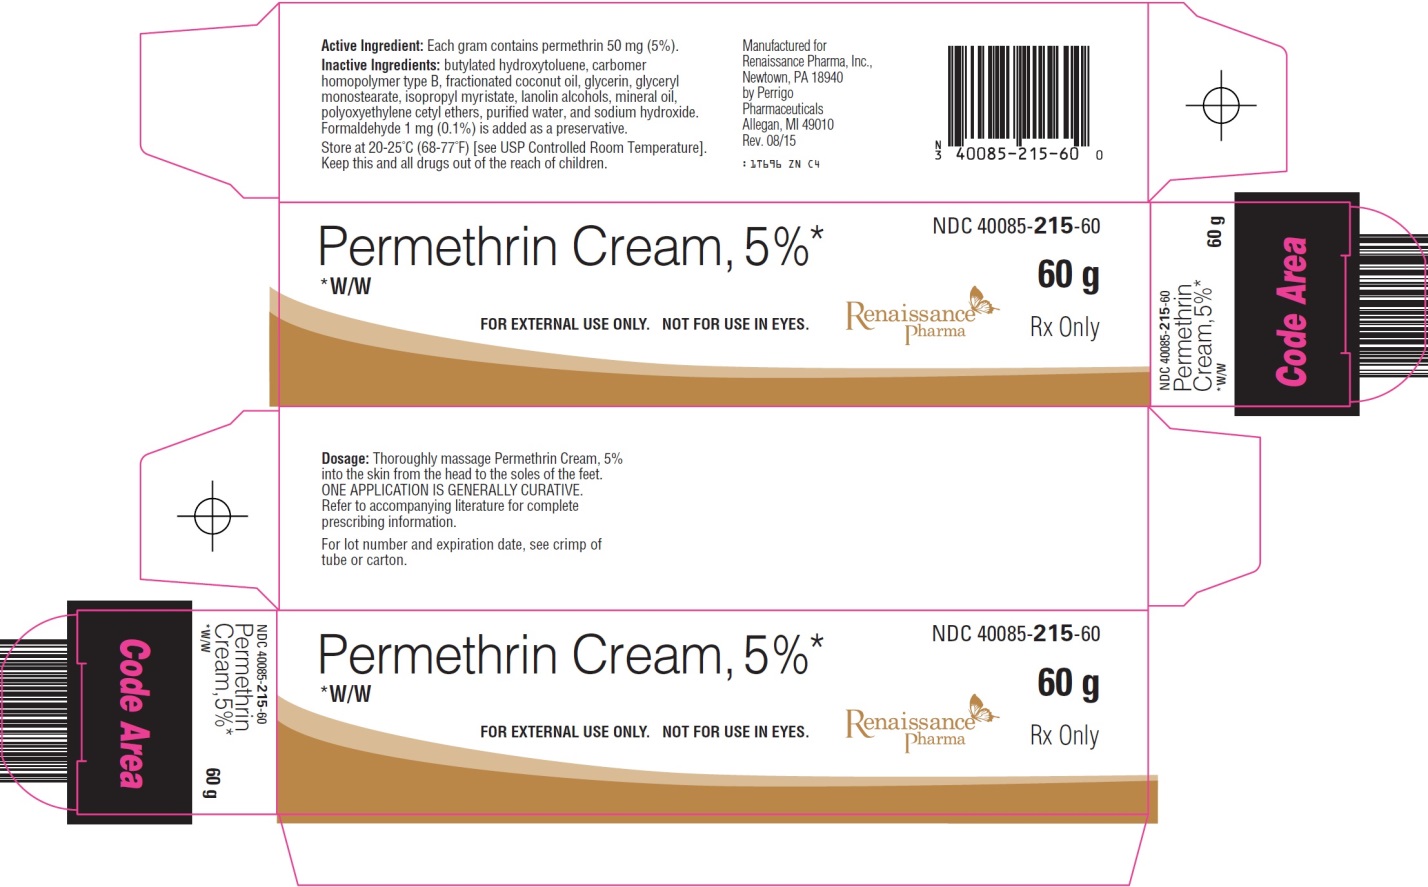 Permethrin Cream, 5% Carton Image